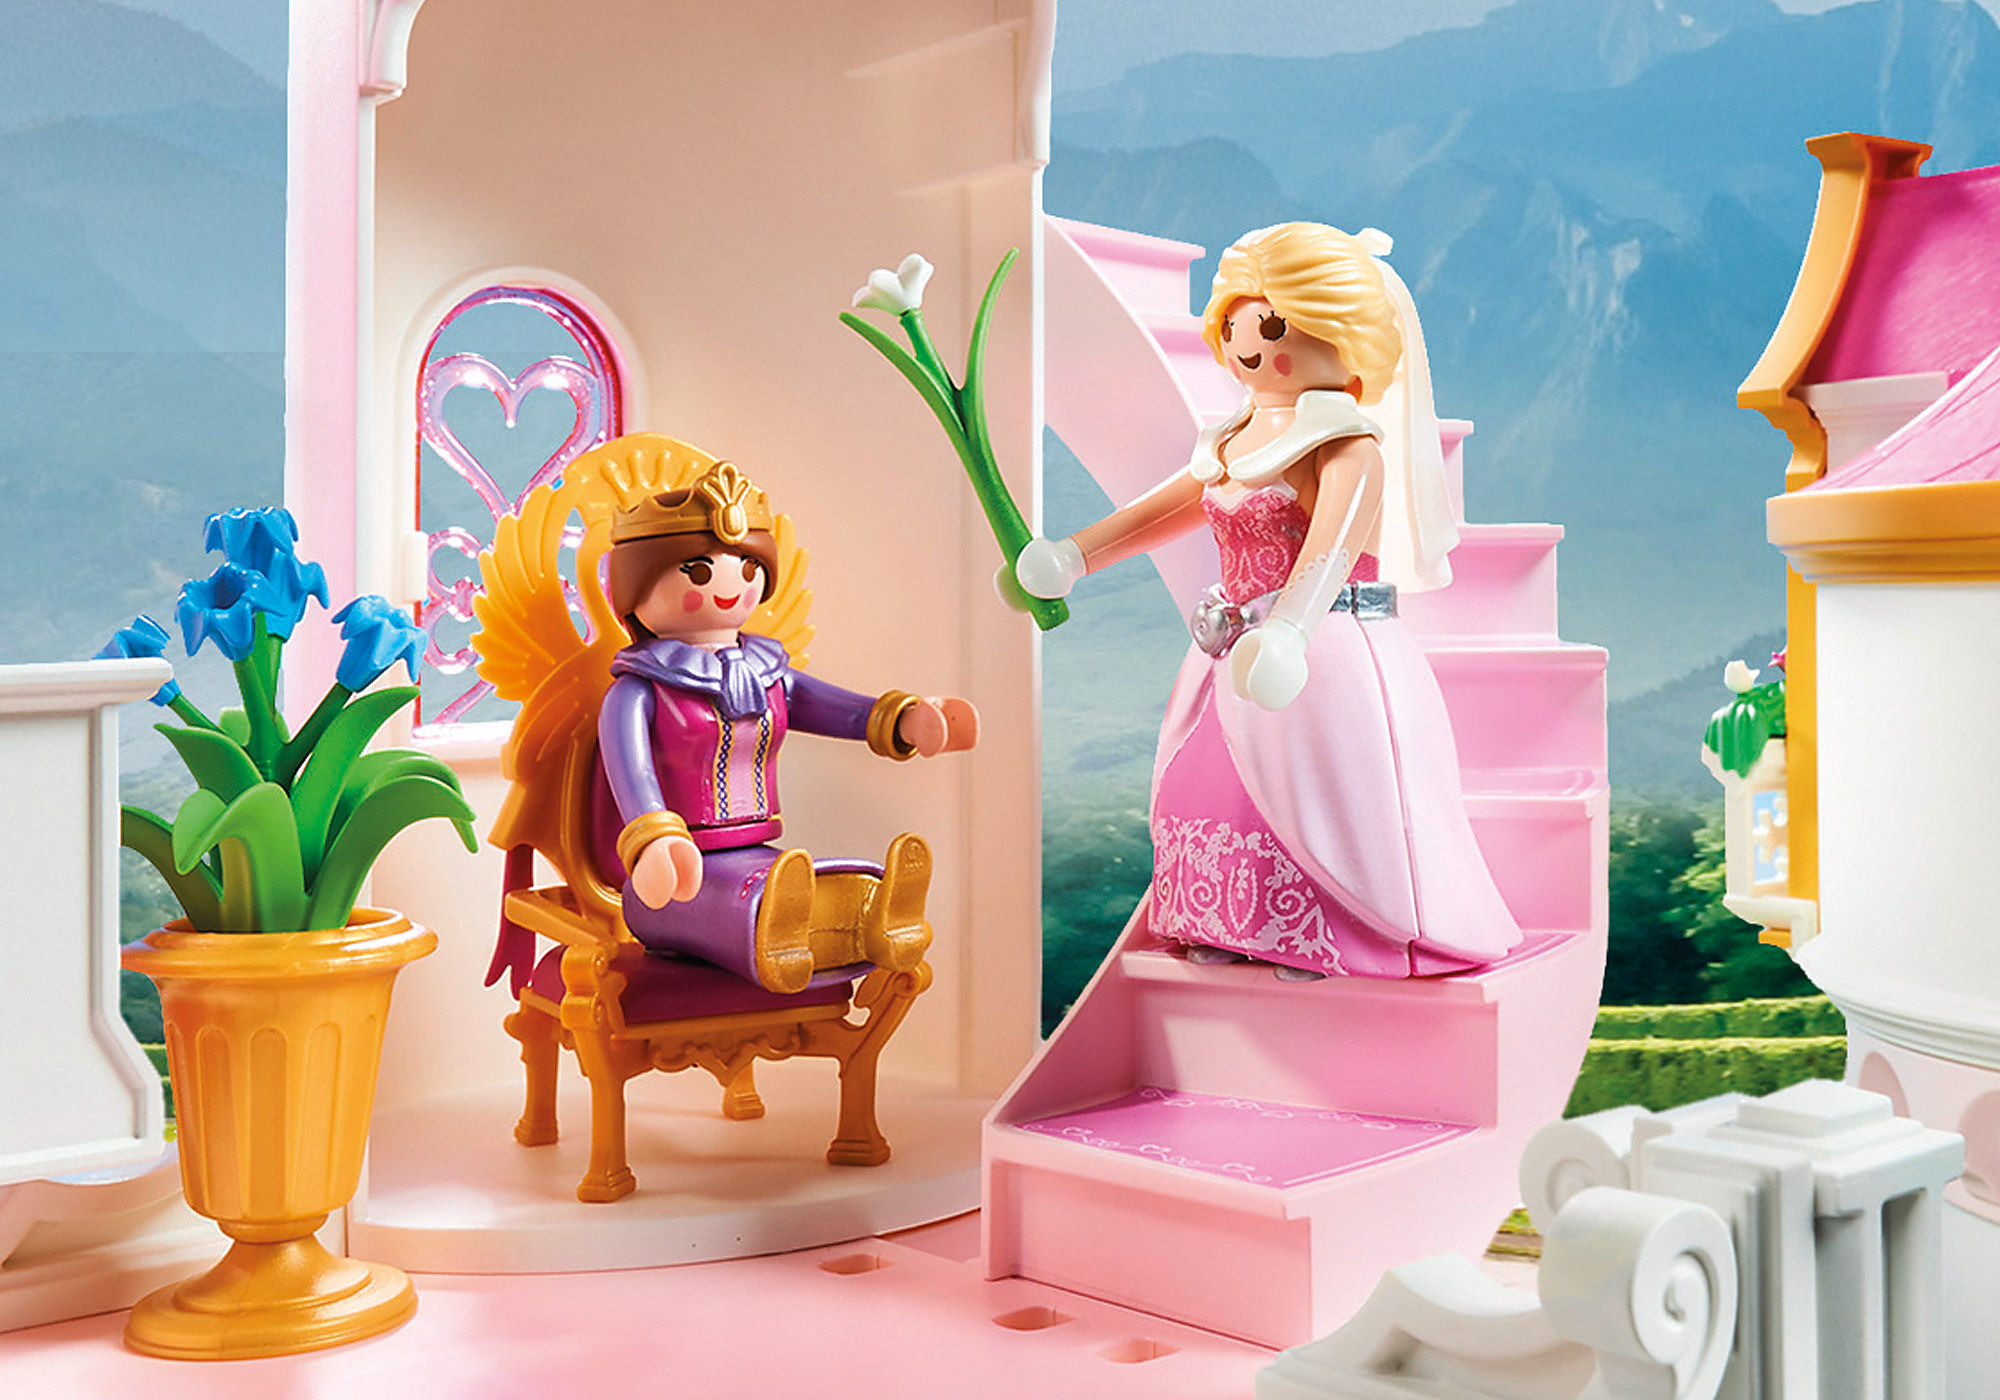 Playmobil - Palais de princesse